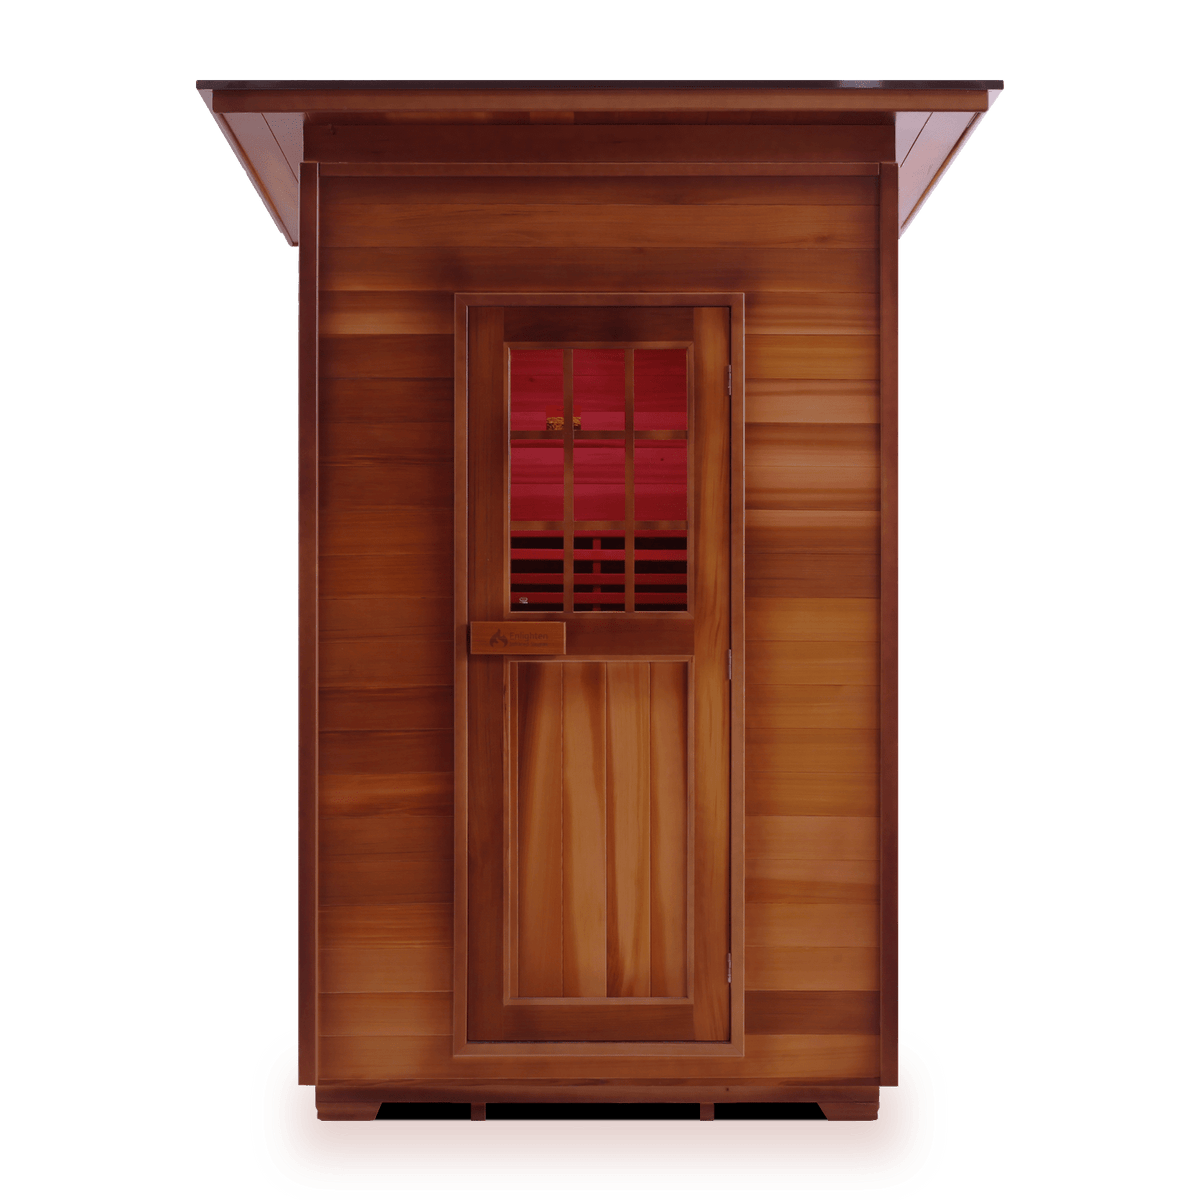 Enlighten Sauna Sapphire 2 Infrared/Traditional Sauna